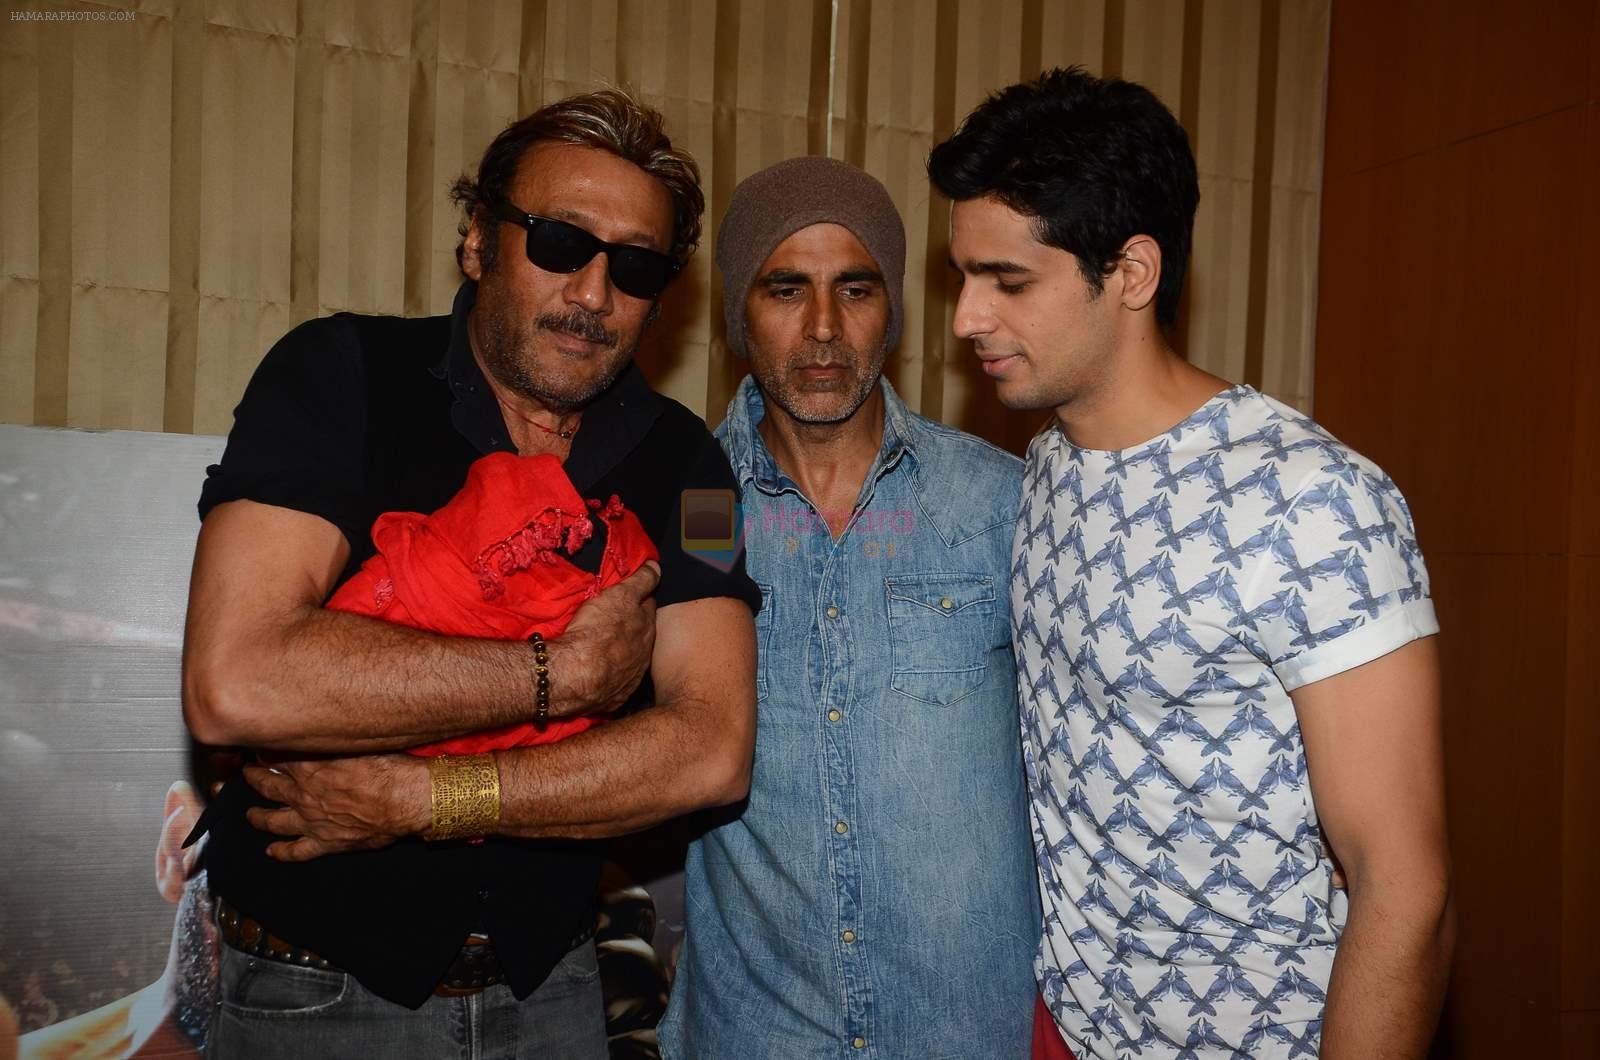 Akshay Kumar, Sidharth Malhotra, Jackie Shroff at Brothers promotion on 7th Aug 2015